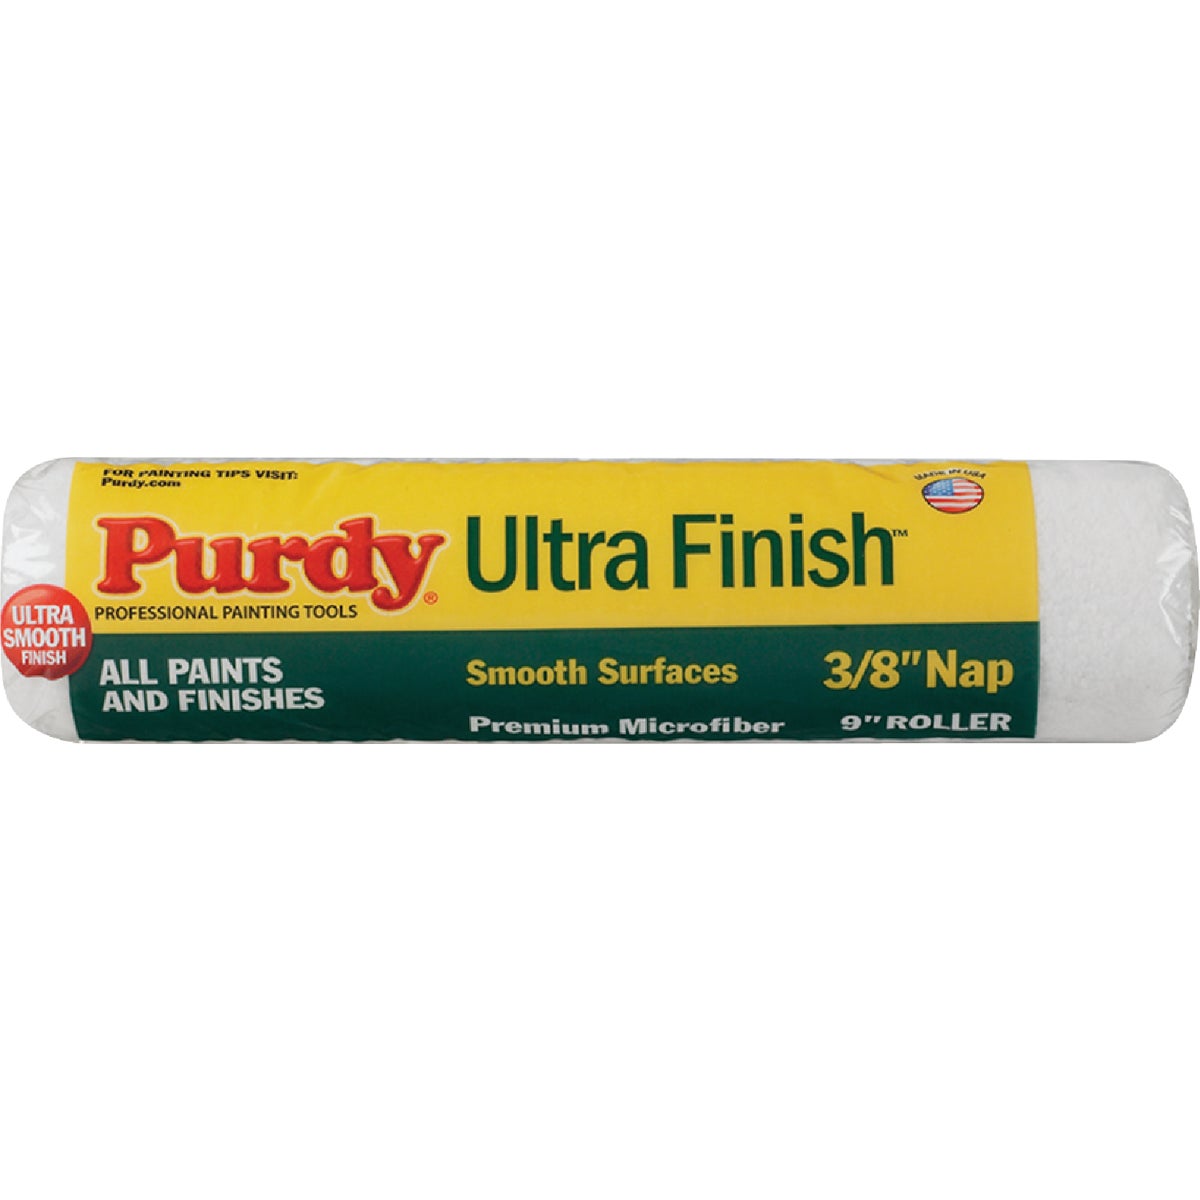 Purdy Ultra Finish 9 In. x 3/8 In. Microfiber Roller Cover